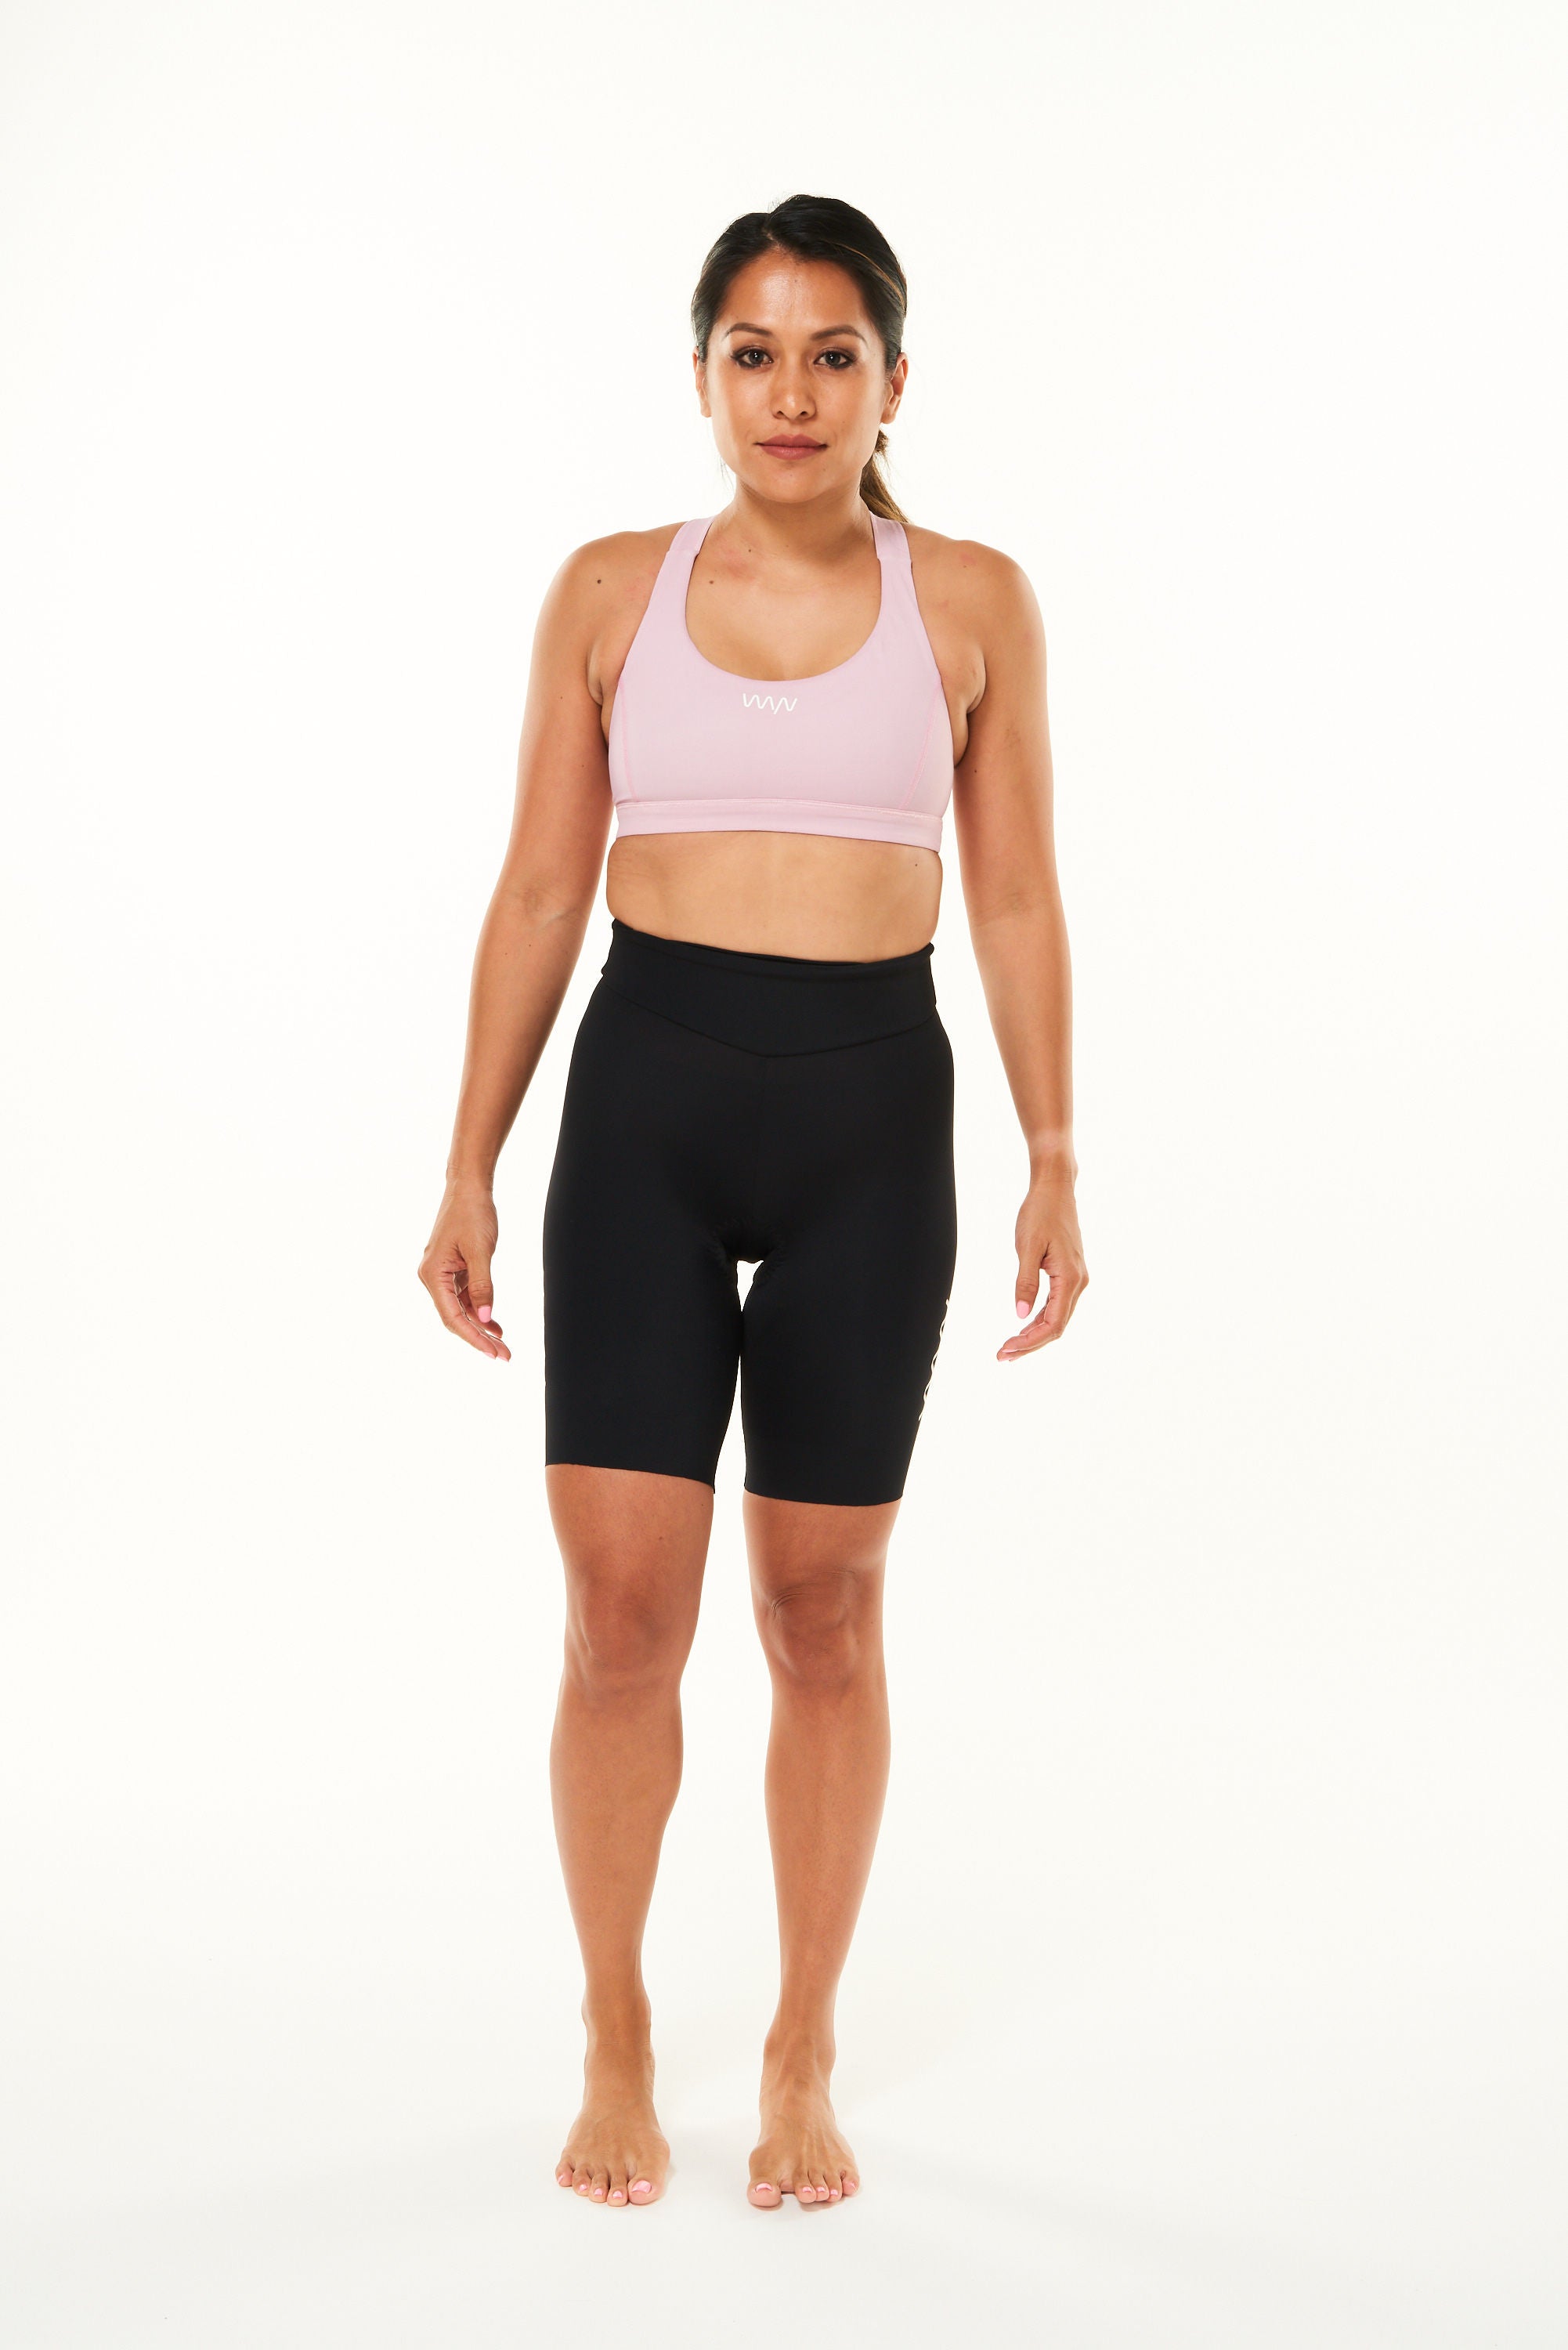 Model wearing women's Velocity Tri Shorts 7.5". Black aerodynamic triathlon shorts.